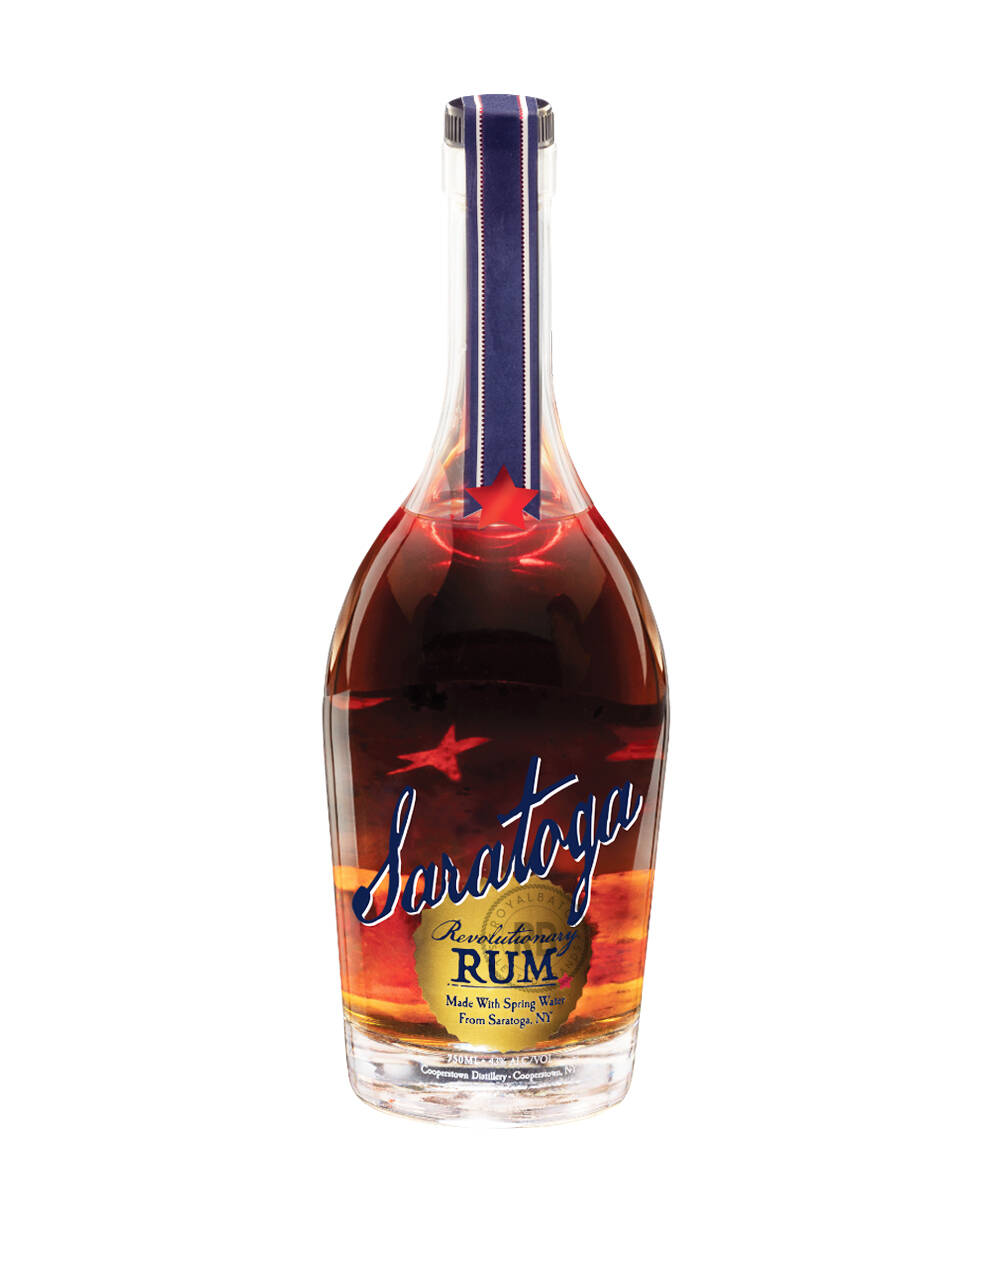 Saratoga Revolutionary Rum